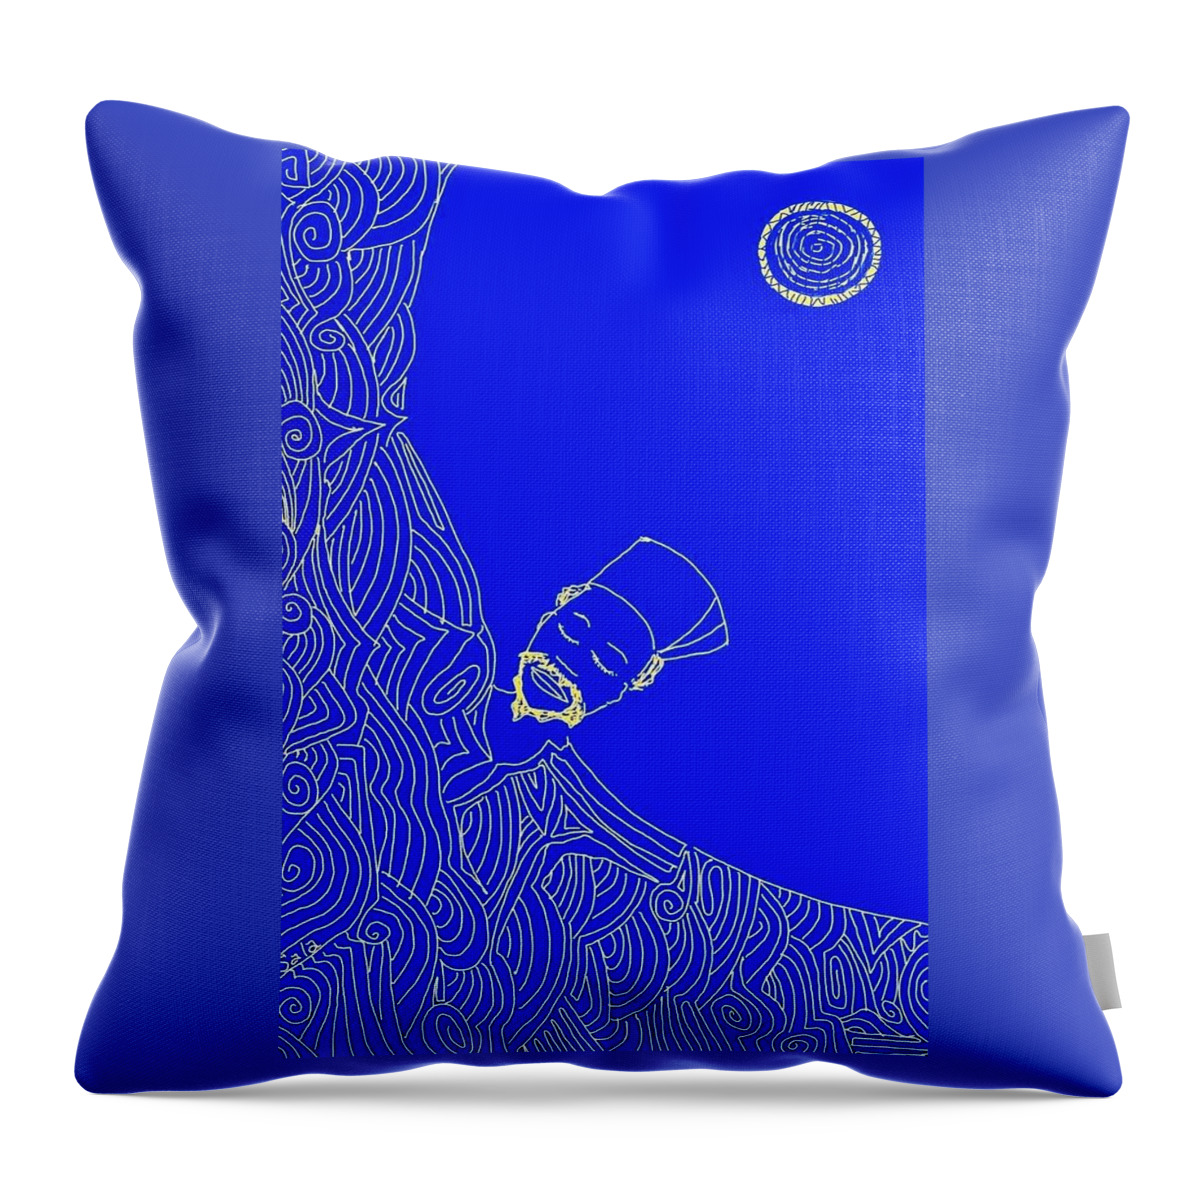  Throw Pillow featuring the digital art Moonlit wisdom Blue by Sala Adenike